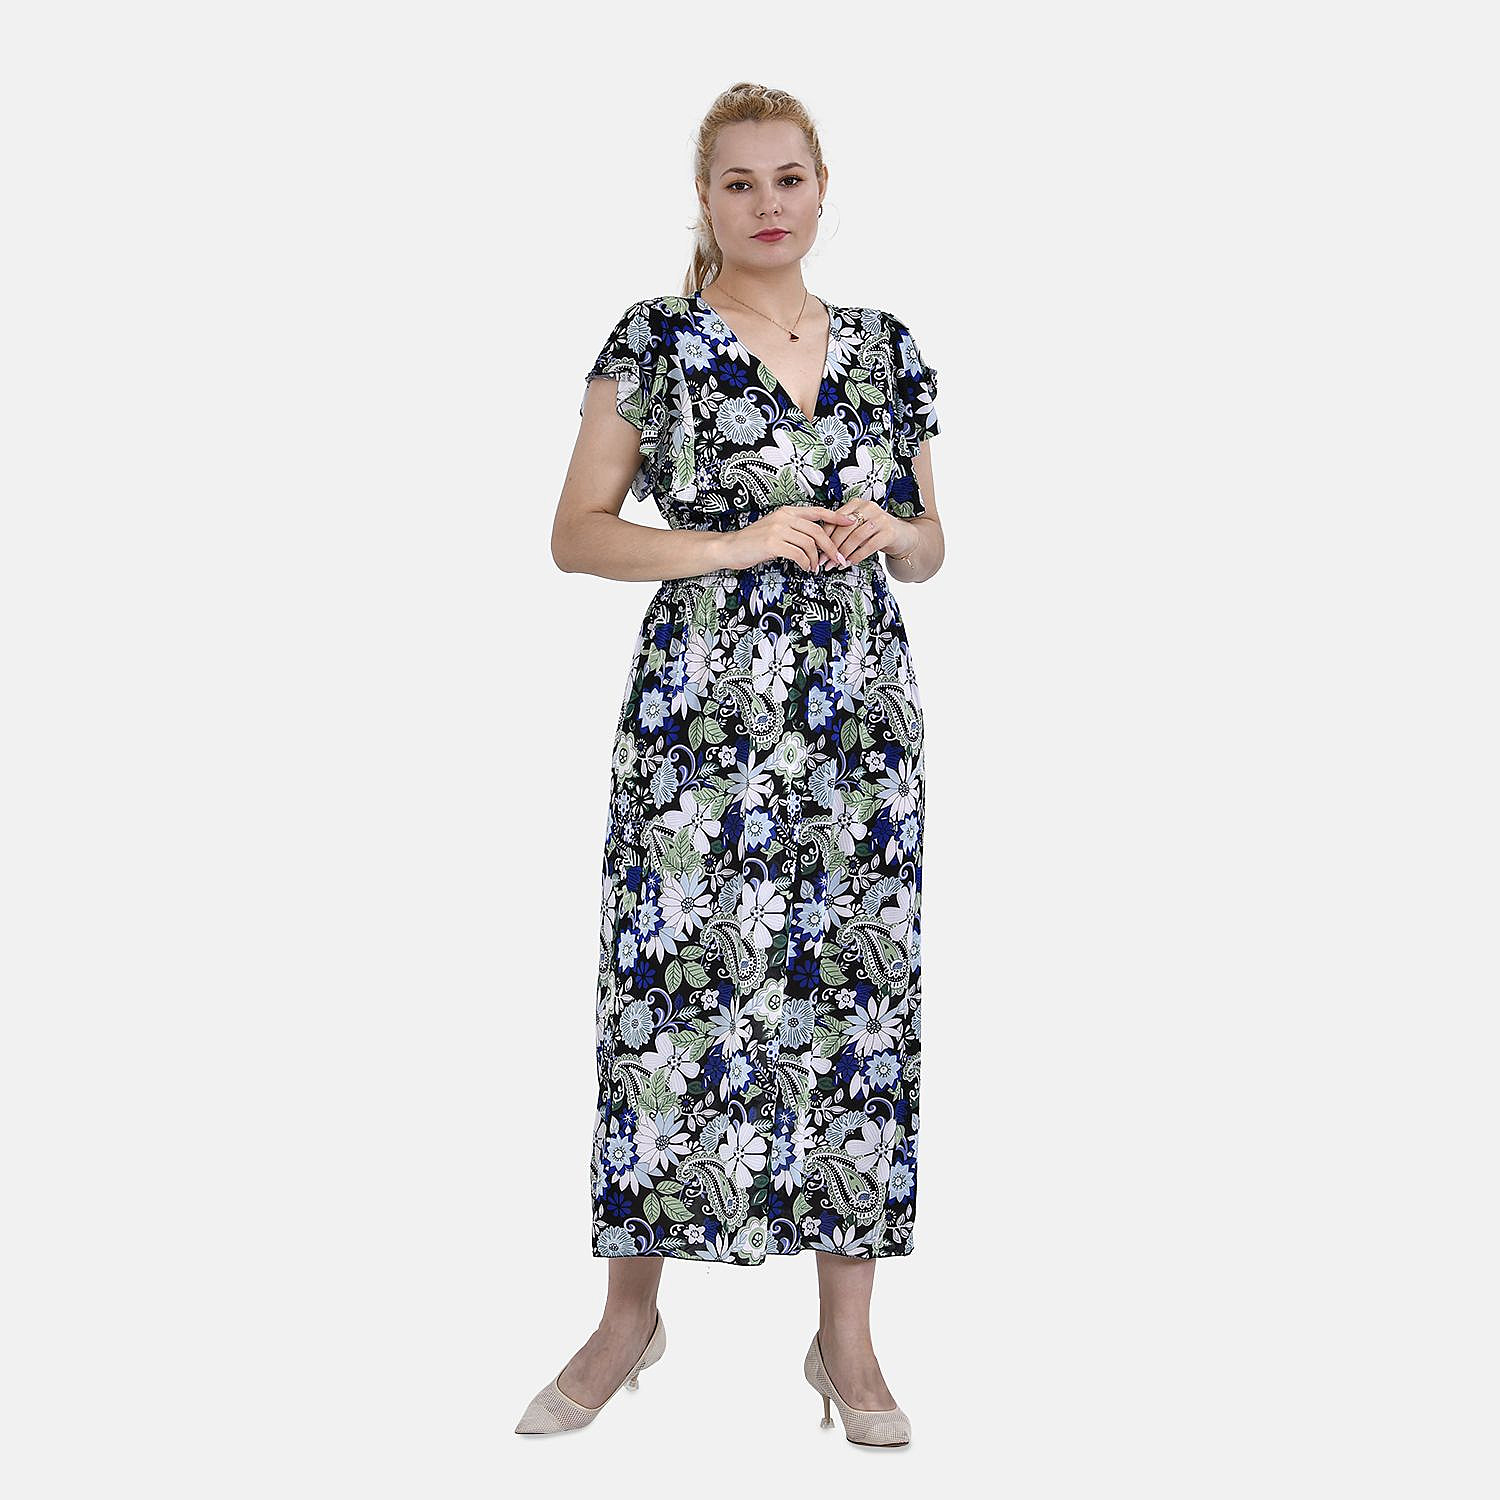 TAMSY Flutter Sleeve Smocked Floral & Leaf Printed Midi Dress (One Size,8-18) - Multi